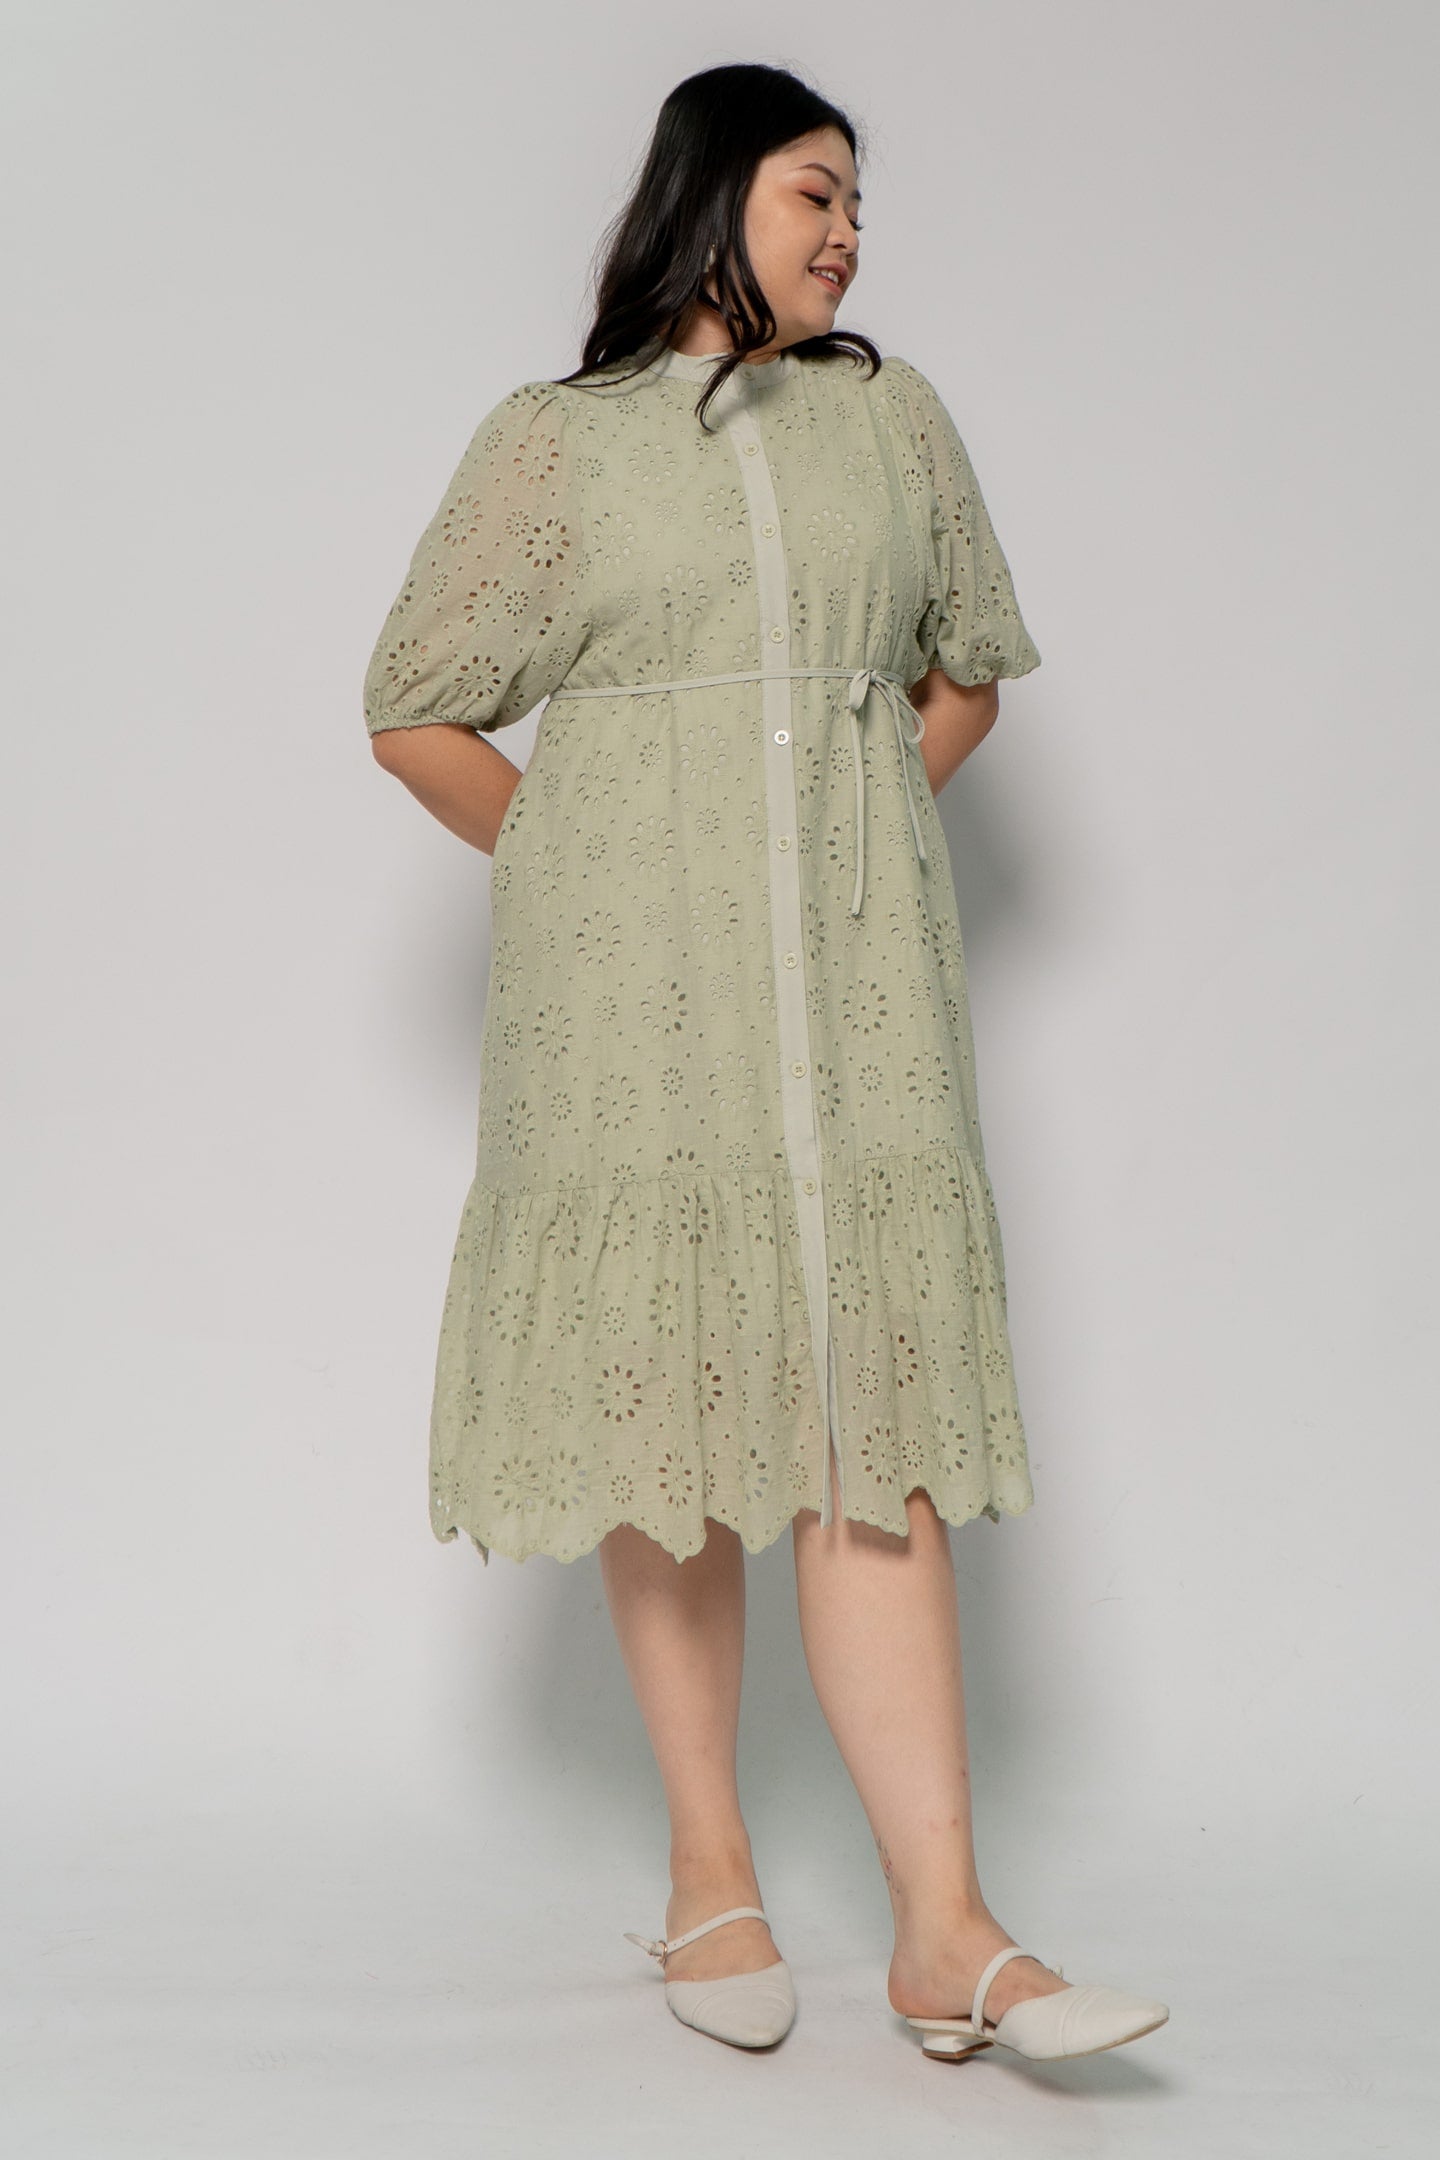 Esther Crochet Dress in Mint Green